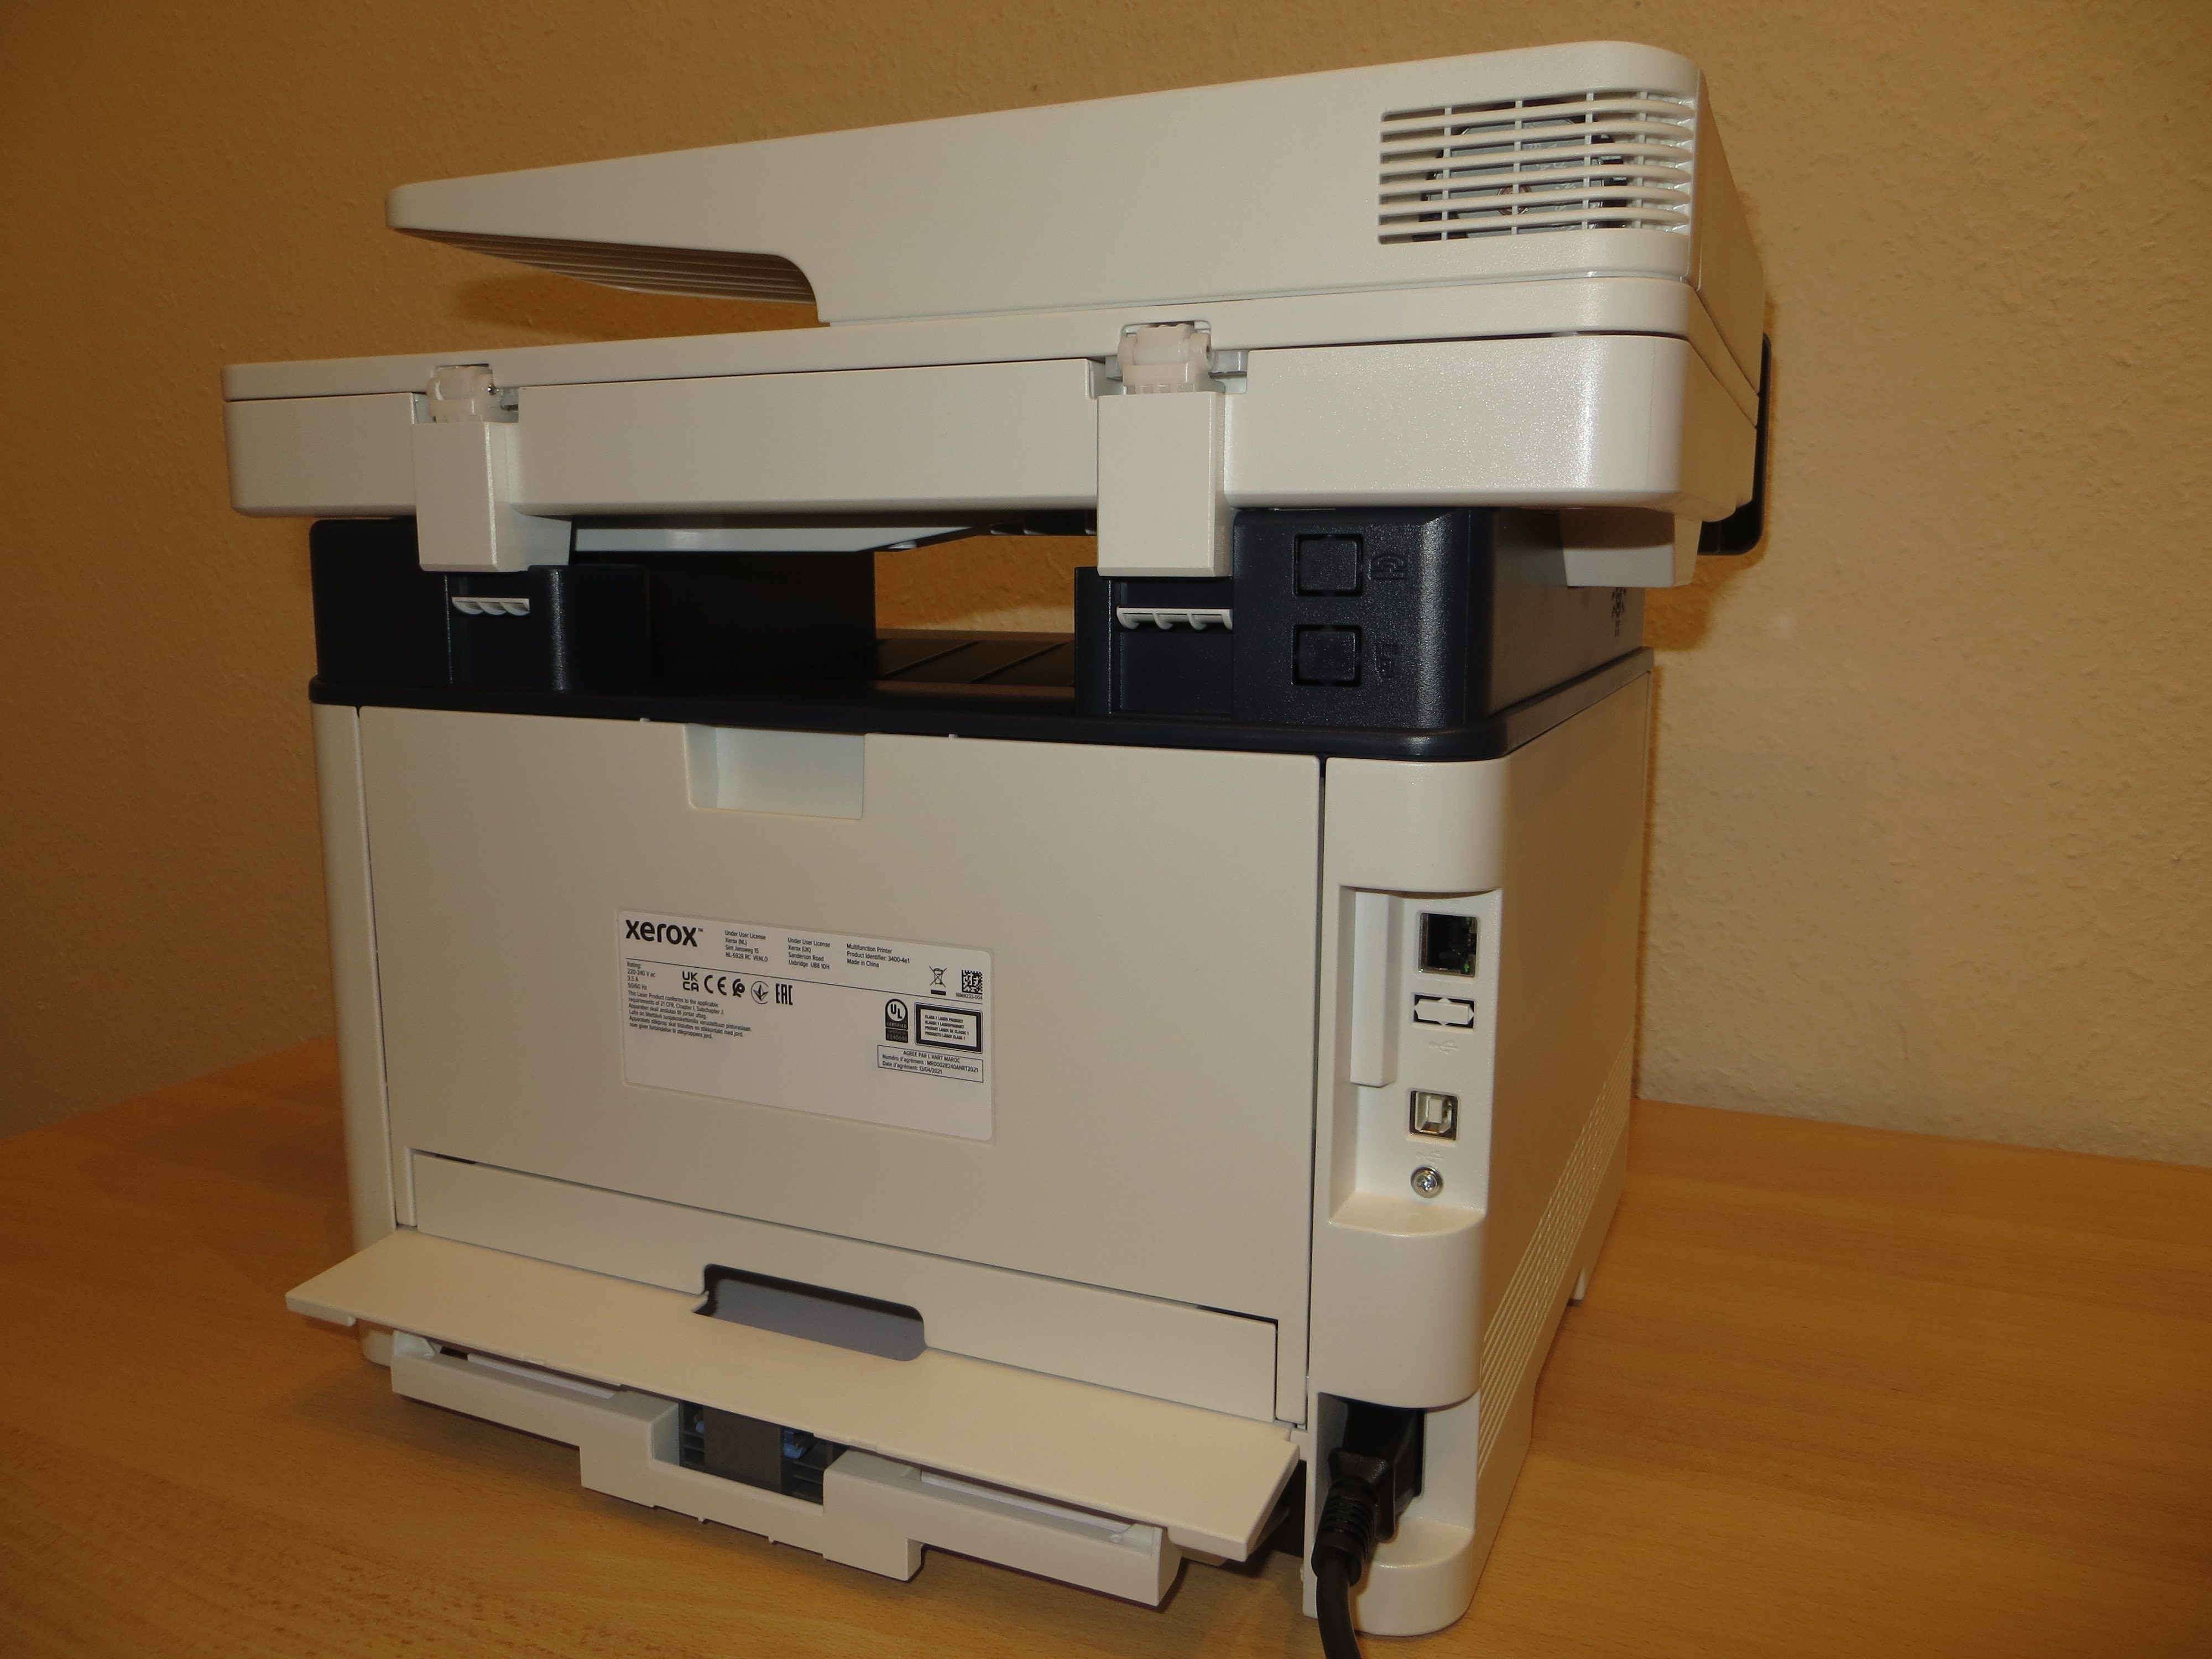 Anschlüsse des Xerox B225V-DNI